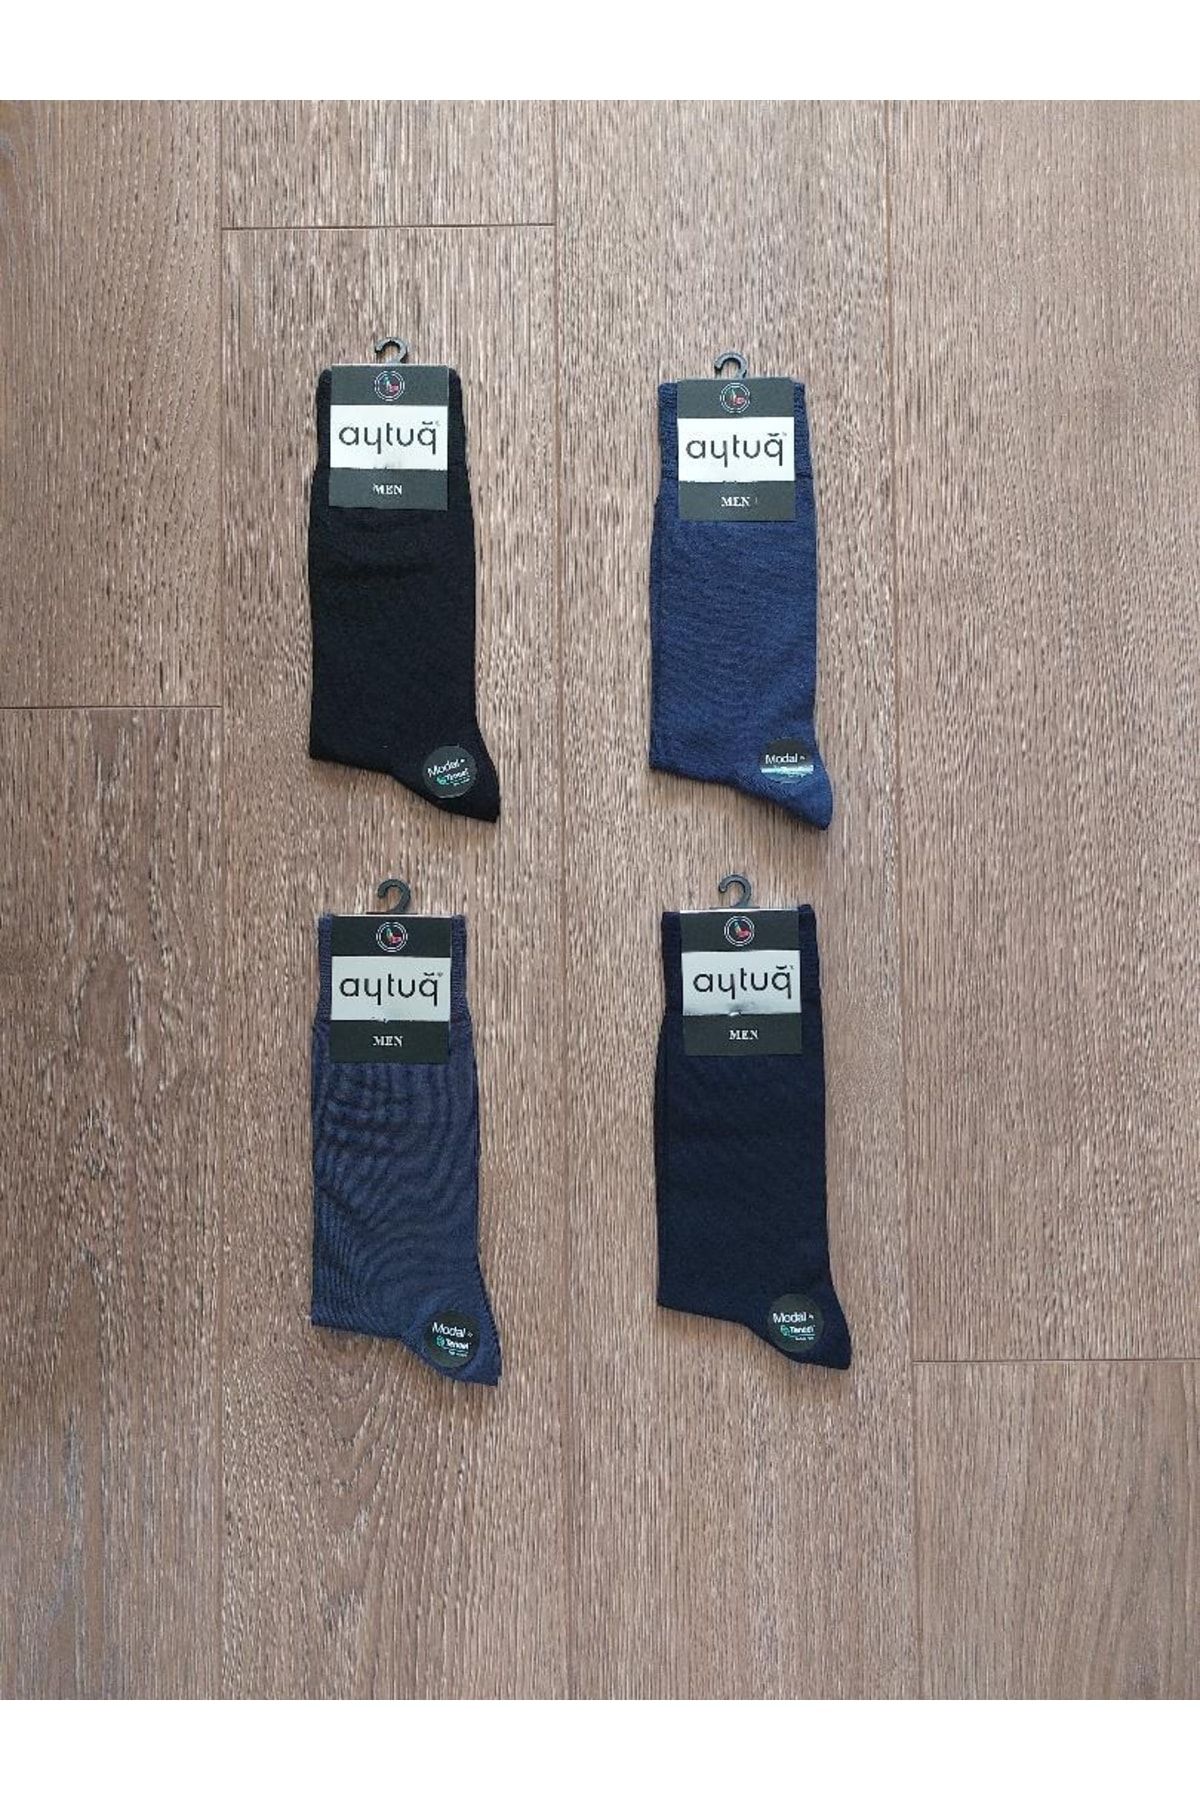 Aytuğ Yaz Sezonu 4 Çift Modal Erkek ( Siyah-lacivert-gri-mavi ) Soket Çorap - 13000